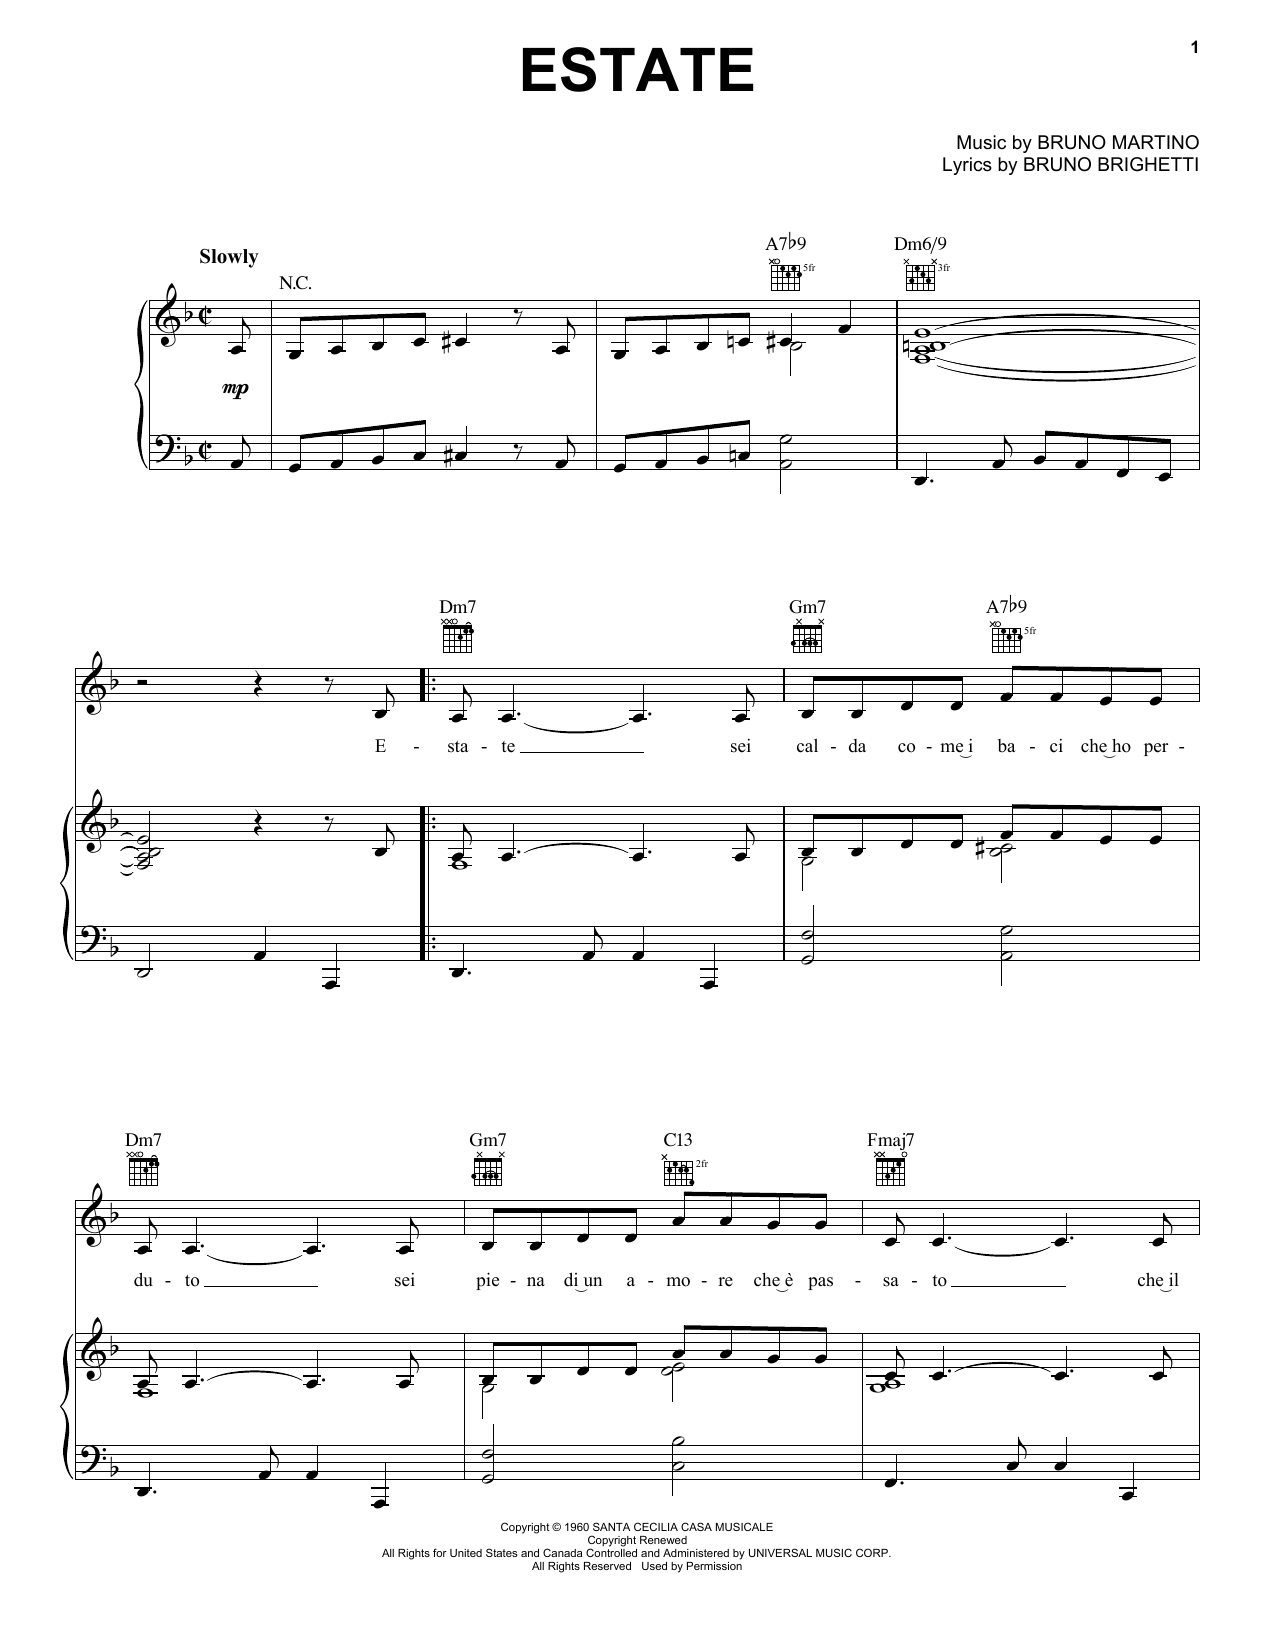 Bruno Martino Estate Sheet Music Notes & Chords for Real Book - Melody, Lyrics & Chords - C Instruments - Download or Print PDF